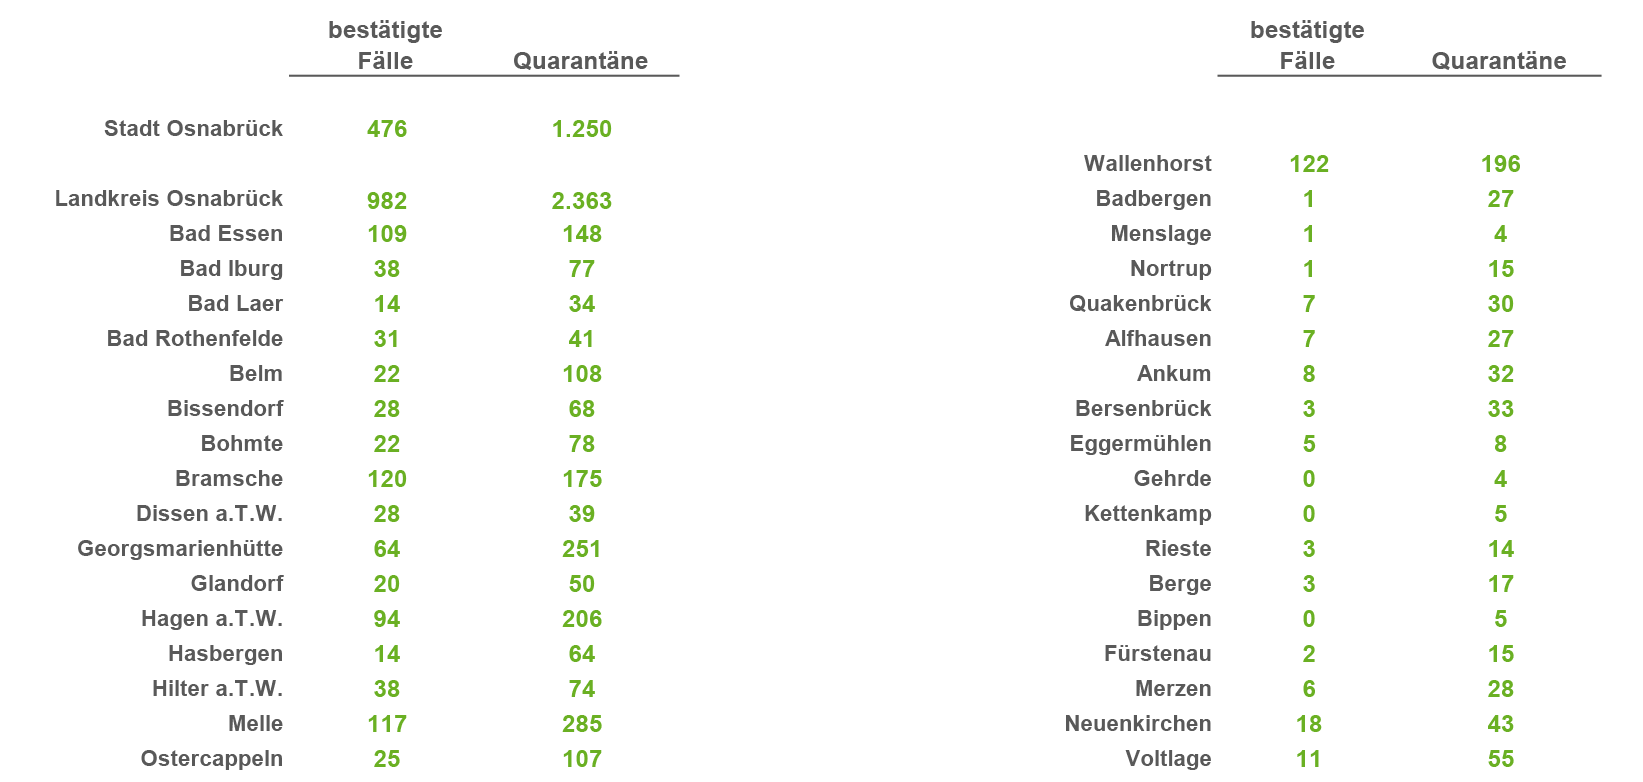 Mehr Corona-Quarantänefälle in Ostercappeln und Quakenbrück